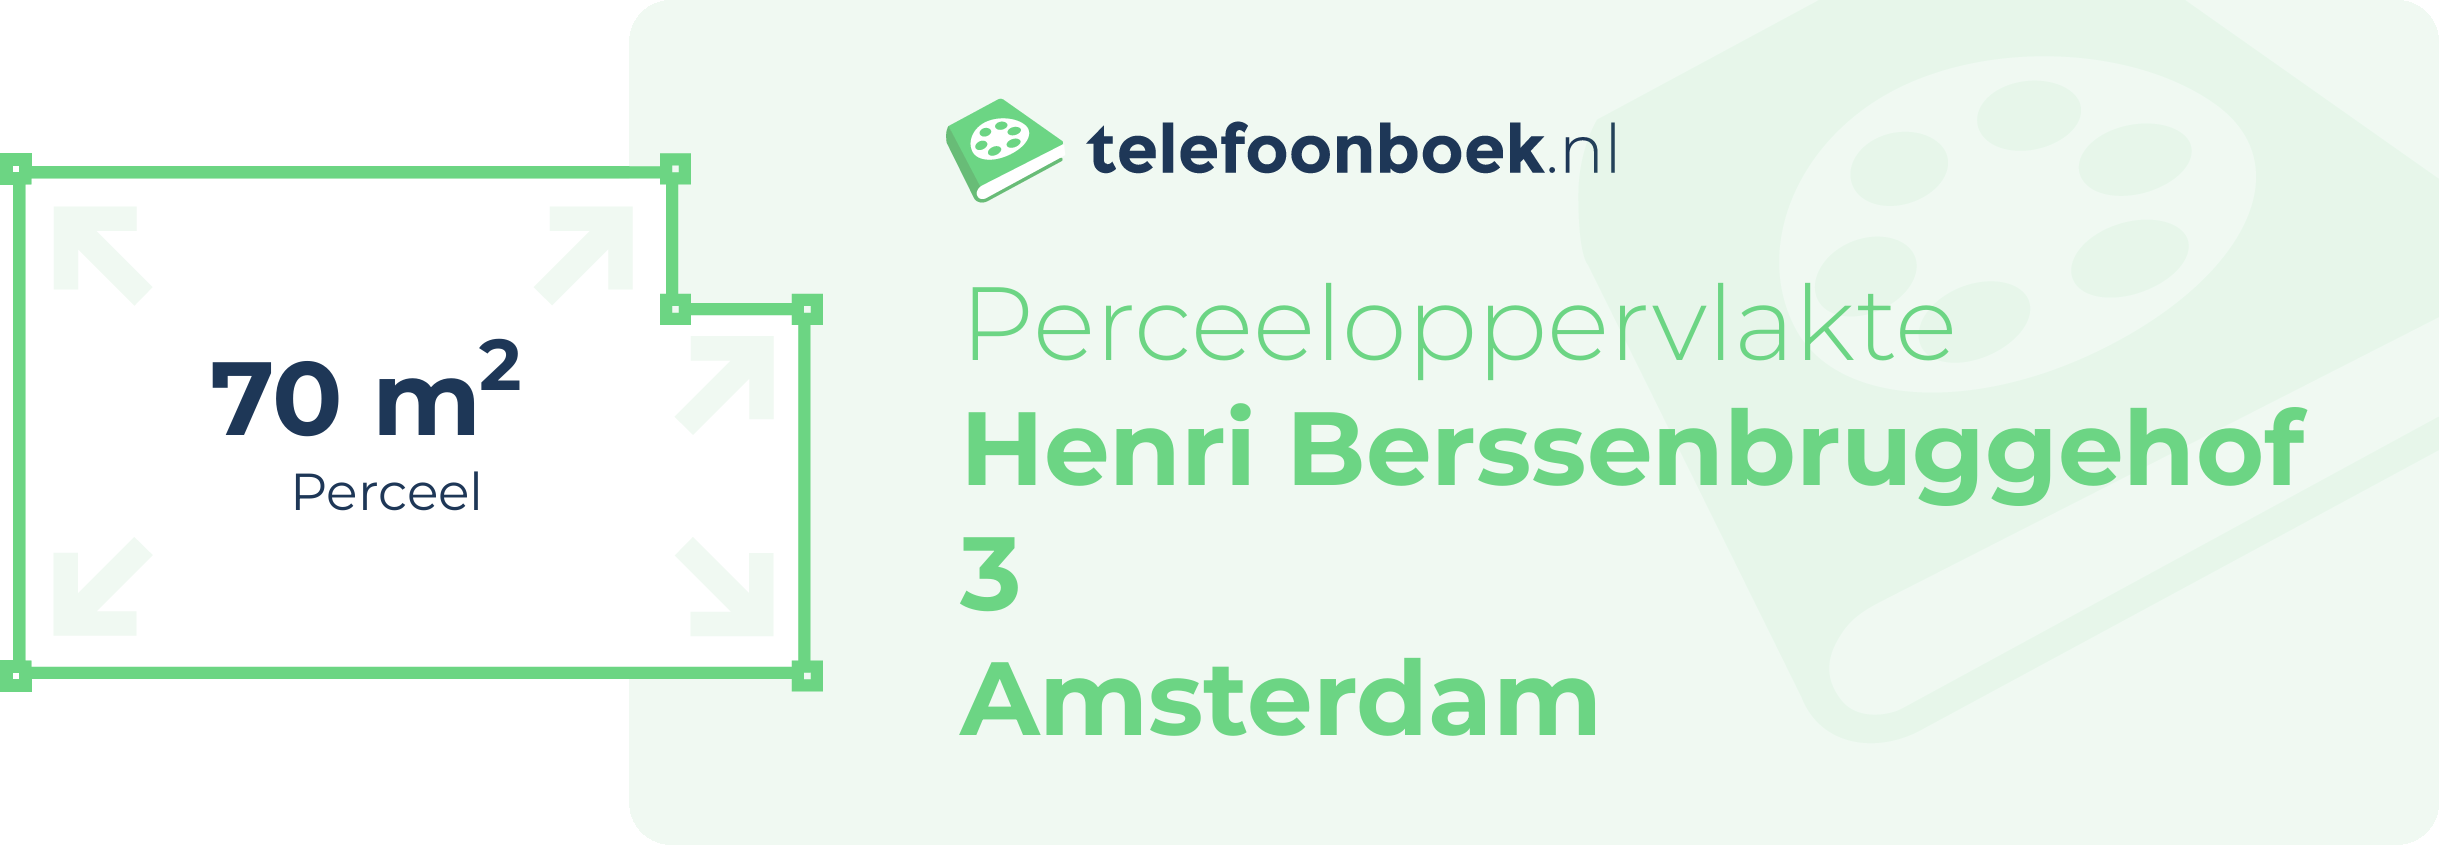 Perceeloppervlakte Henri Berssenbruggehof 3 Amsterdam